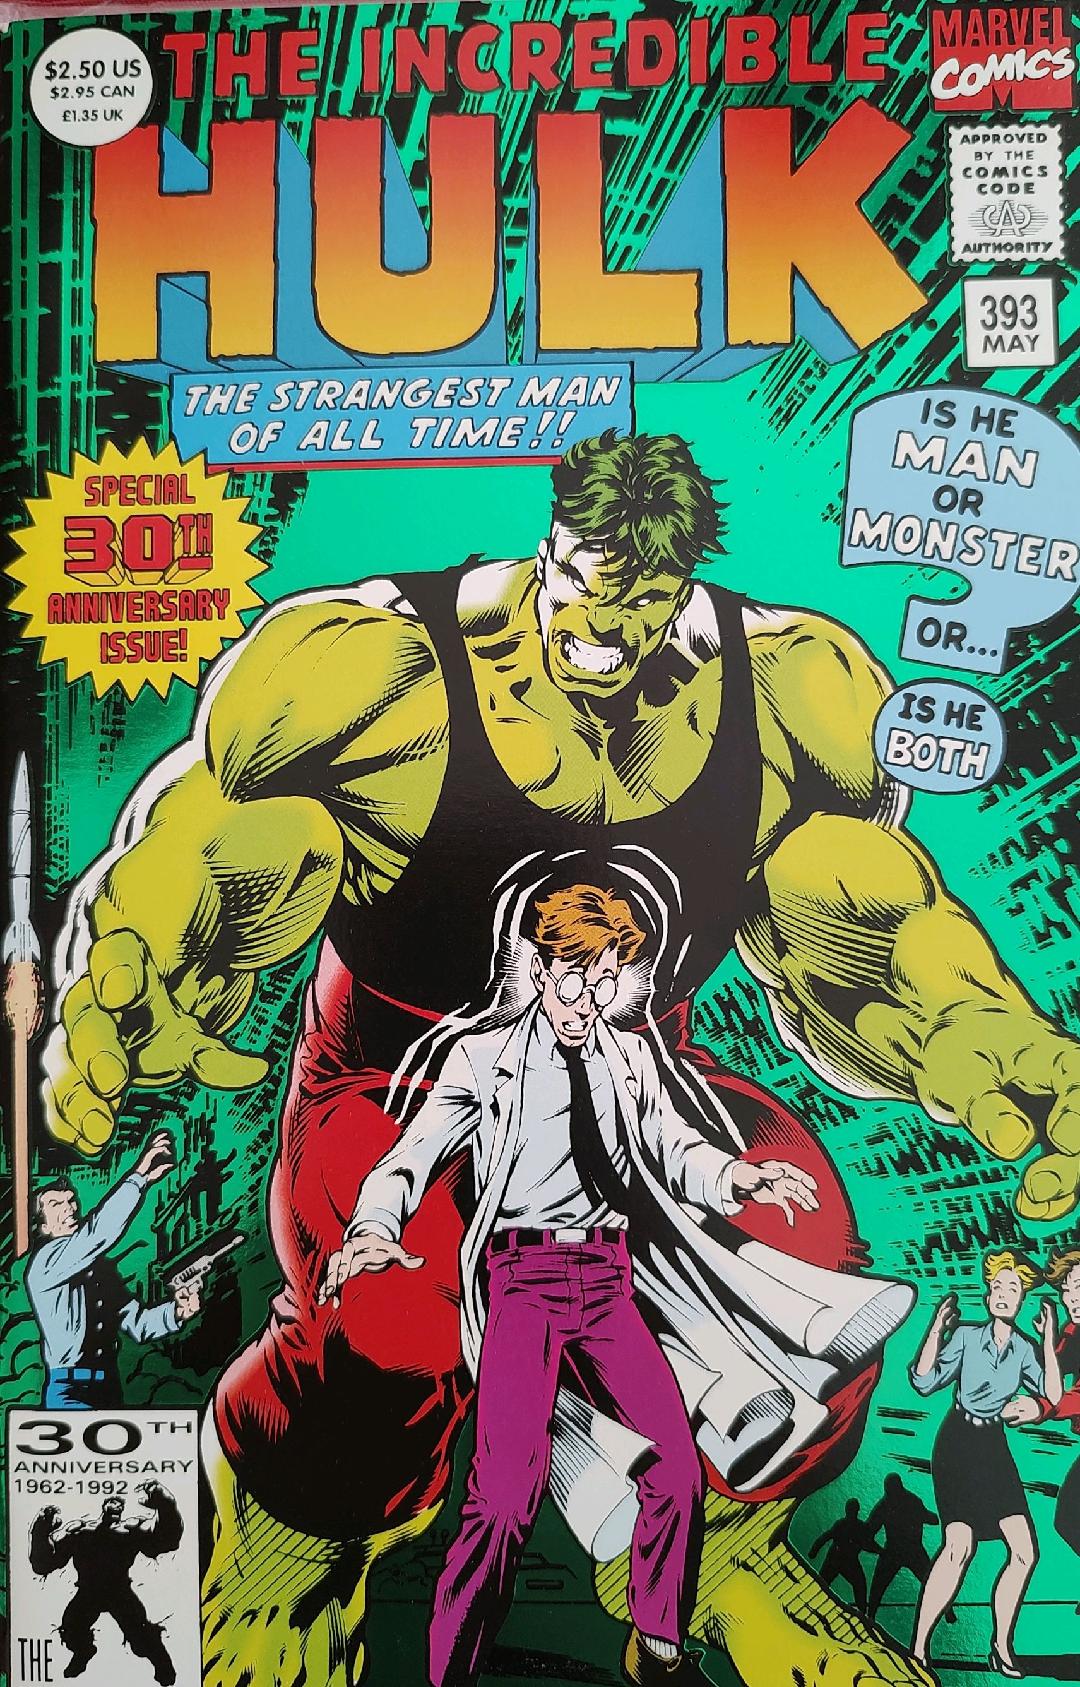 The Incredible Hulk #393 Comic Book Cover